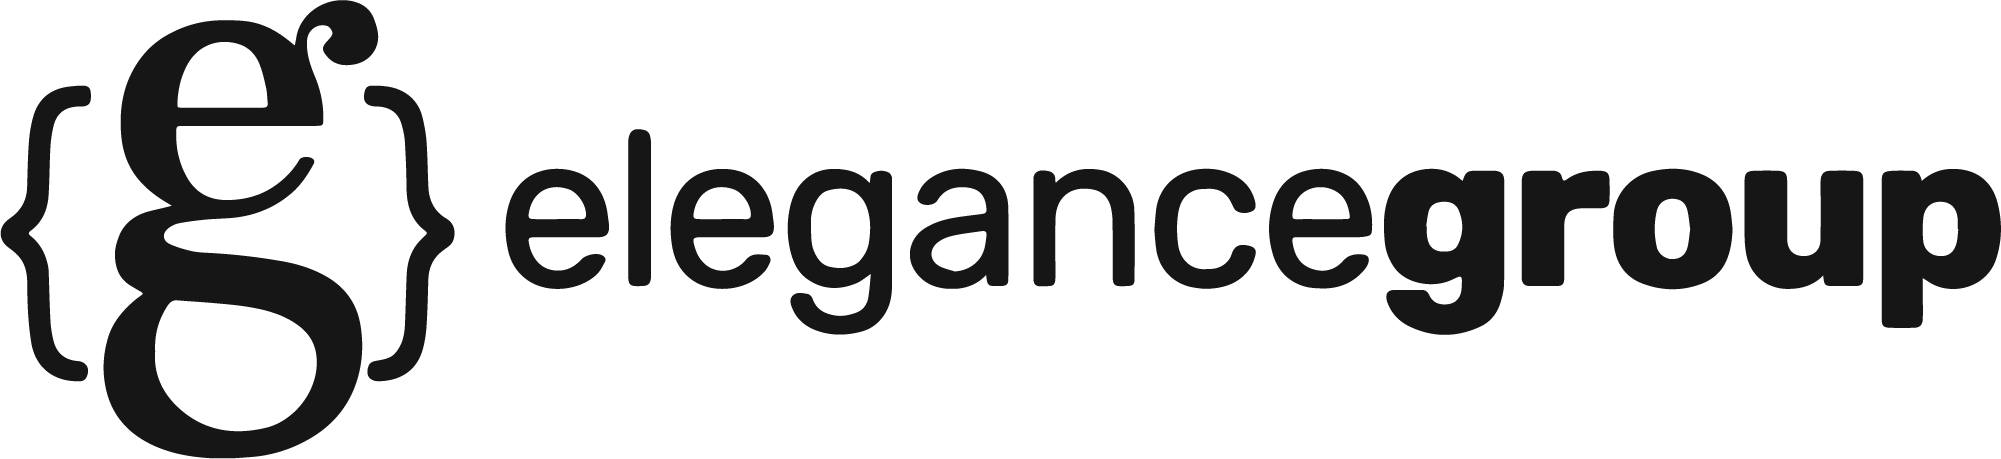 Elegance Group-logo